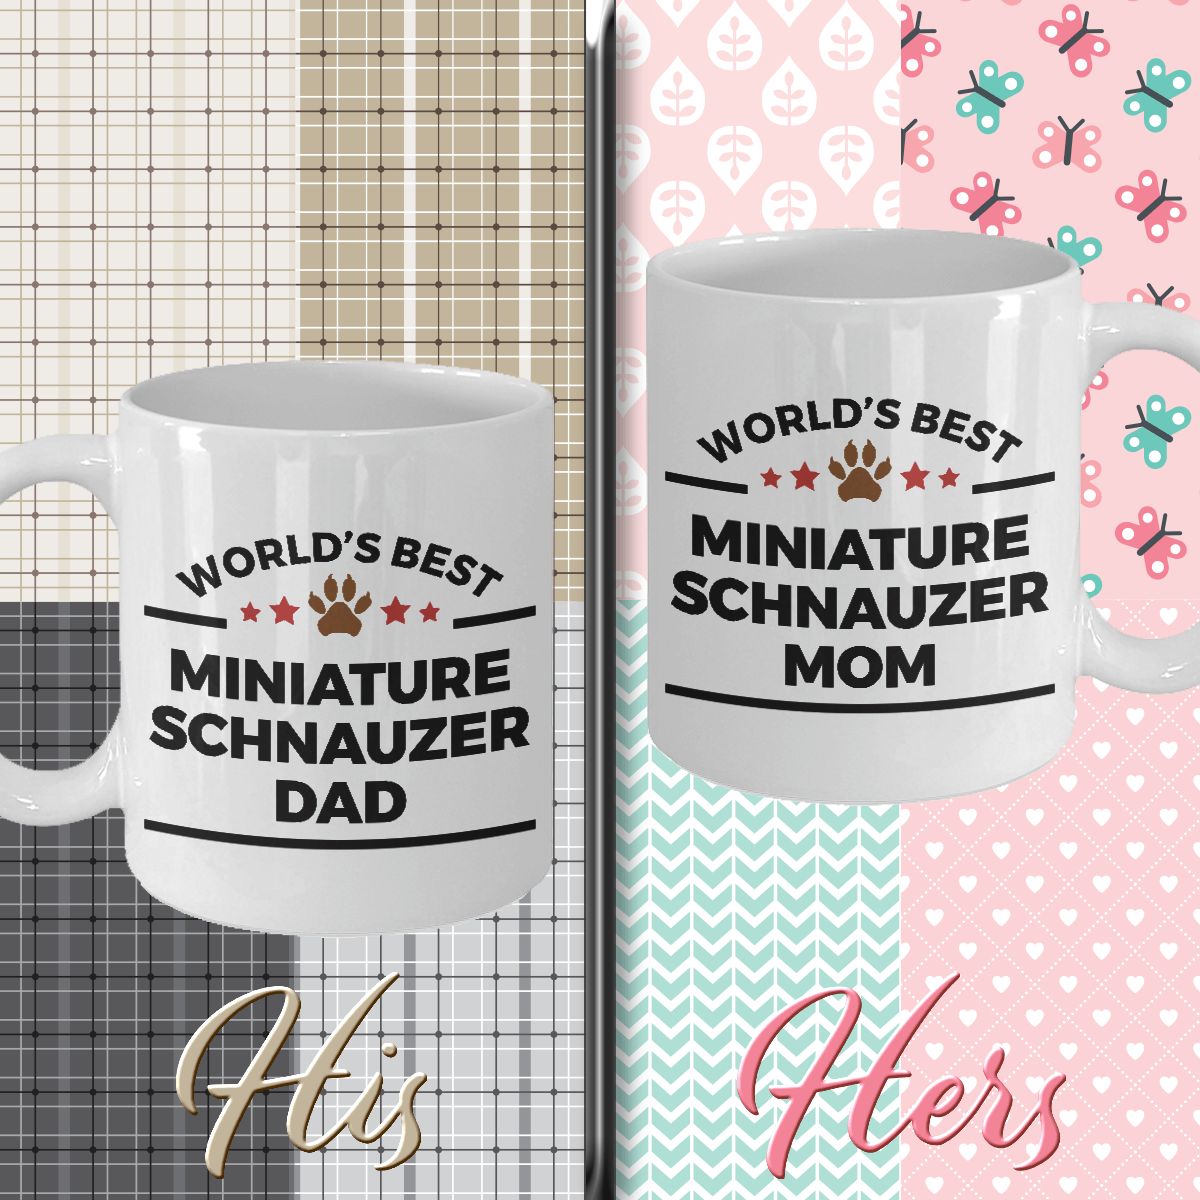 Miniature Schnauzer Dog  Mom and Dad Coffee Mug - Set of 2 His and Hers